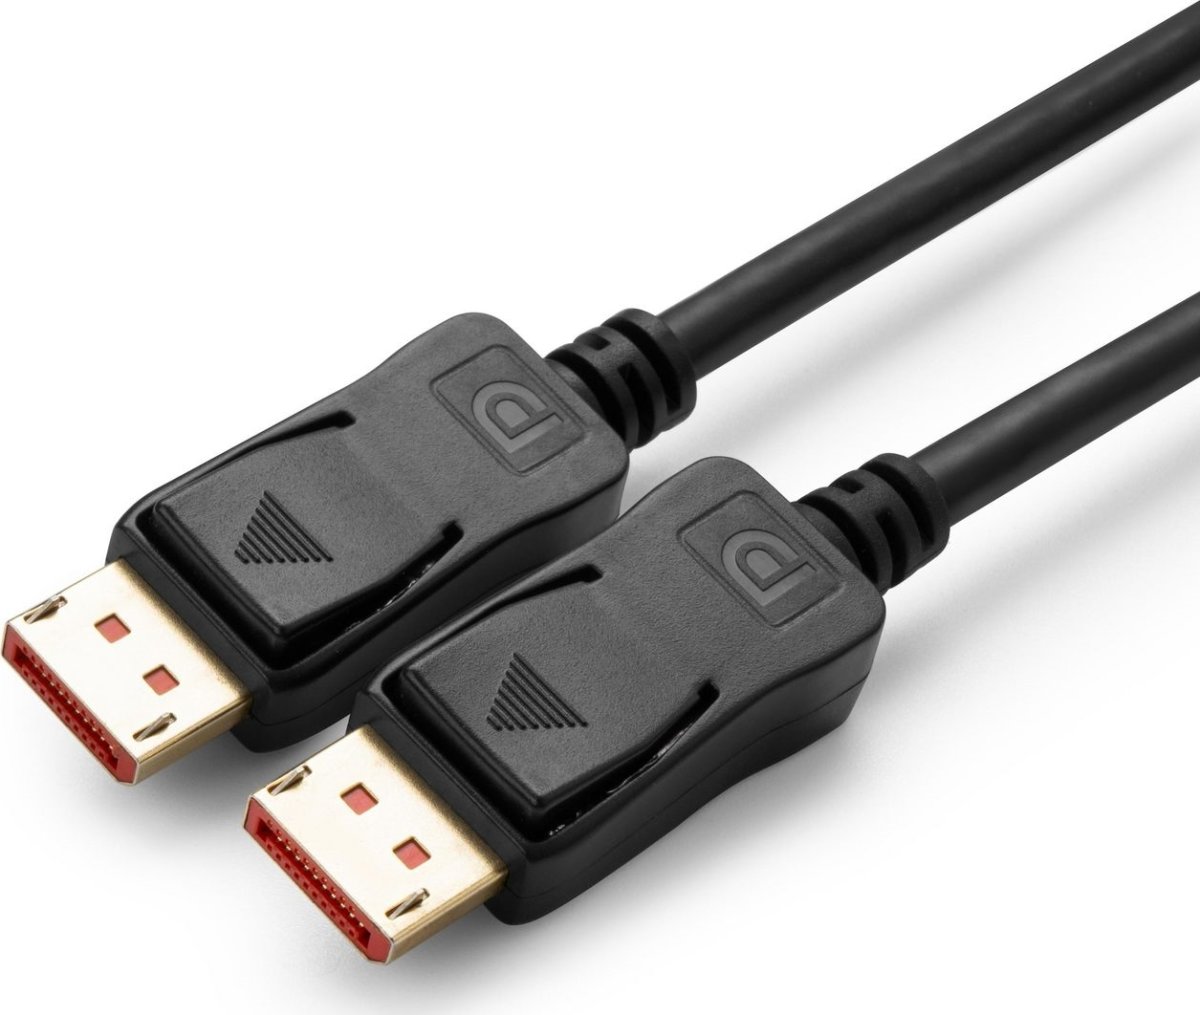 MicroConnect 8K DisplayPort 1.4 kabel | 2 m